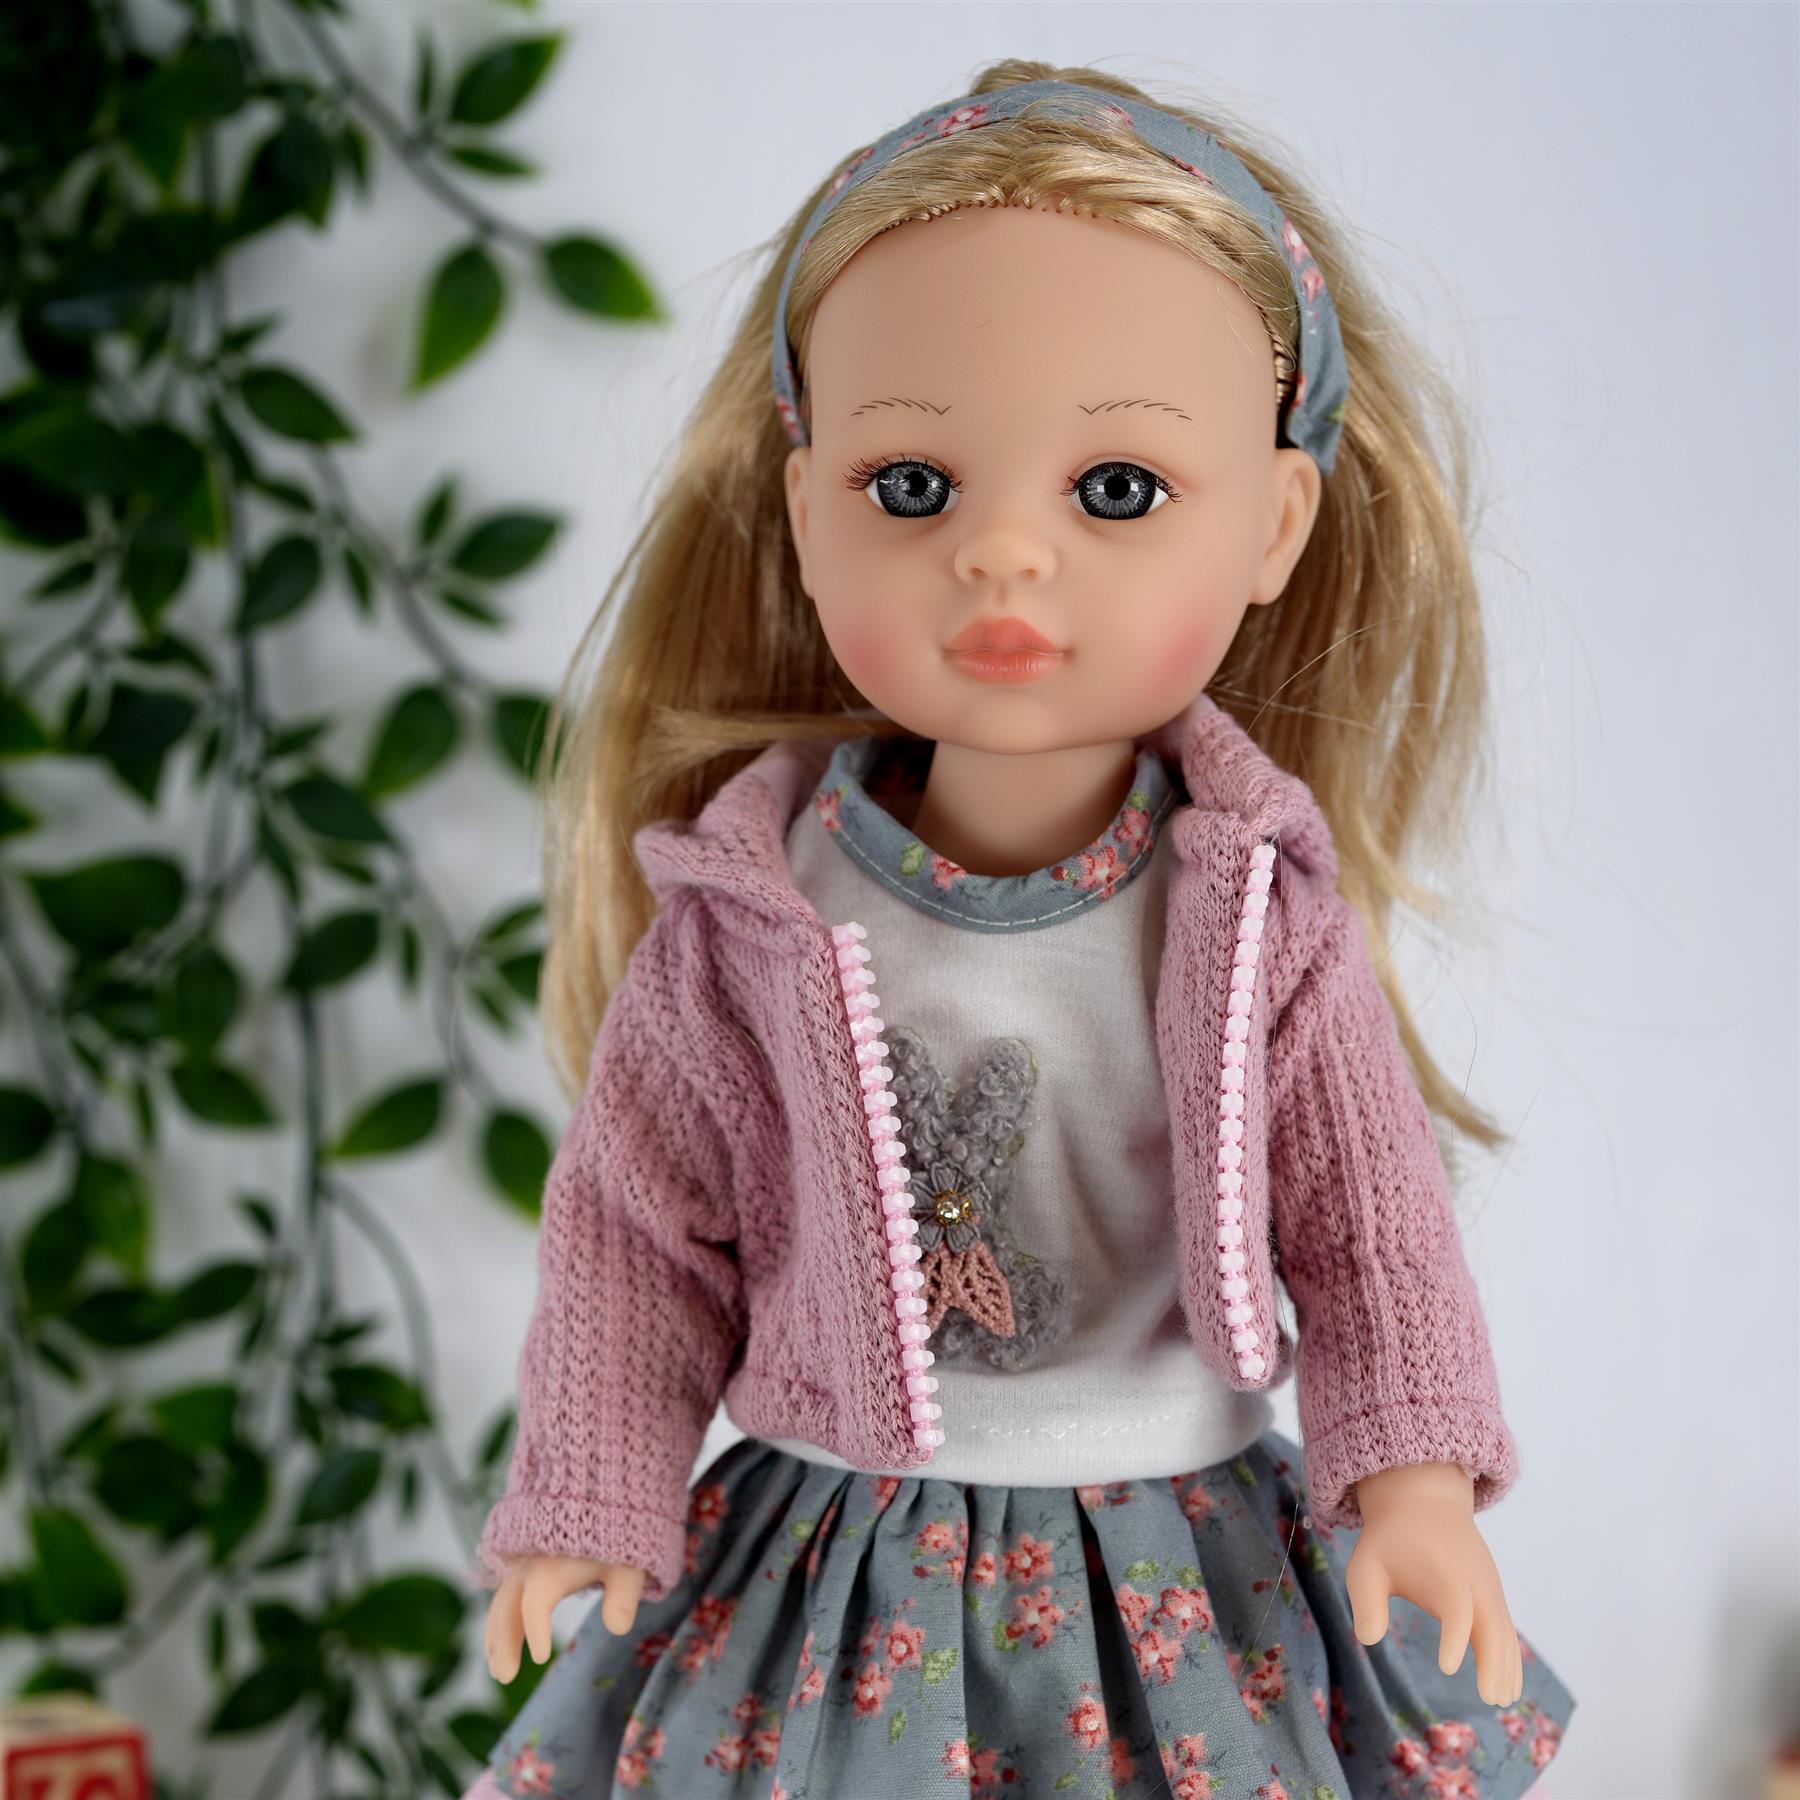 BiBi Fashion Doll " Sophia" (38 cm / 15") by BiBi Doll - The Magic Toy Shop